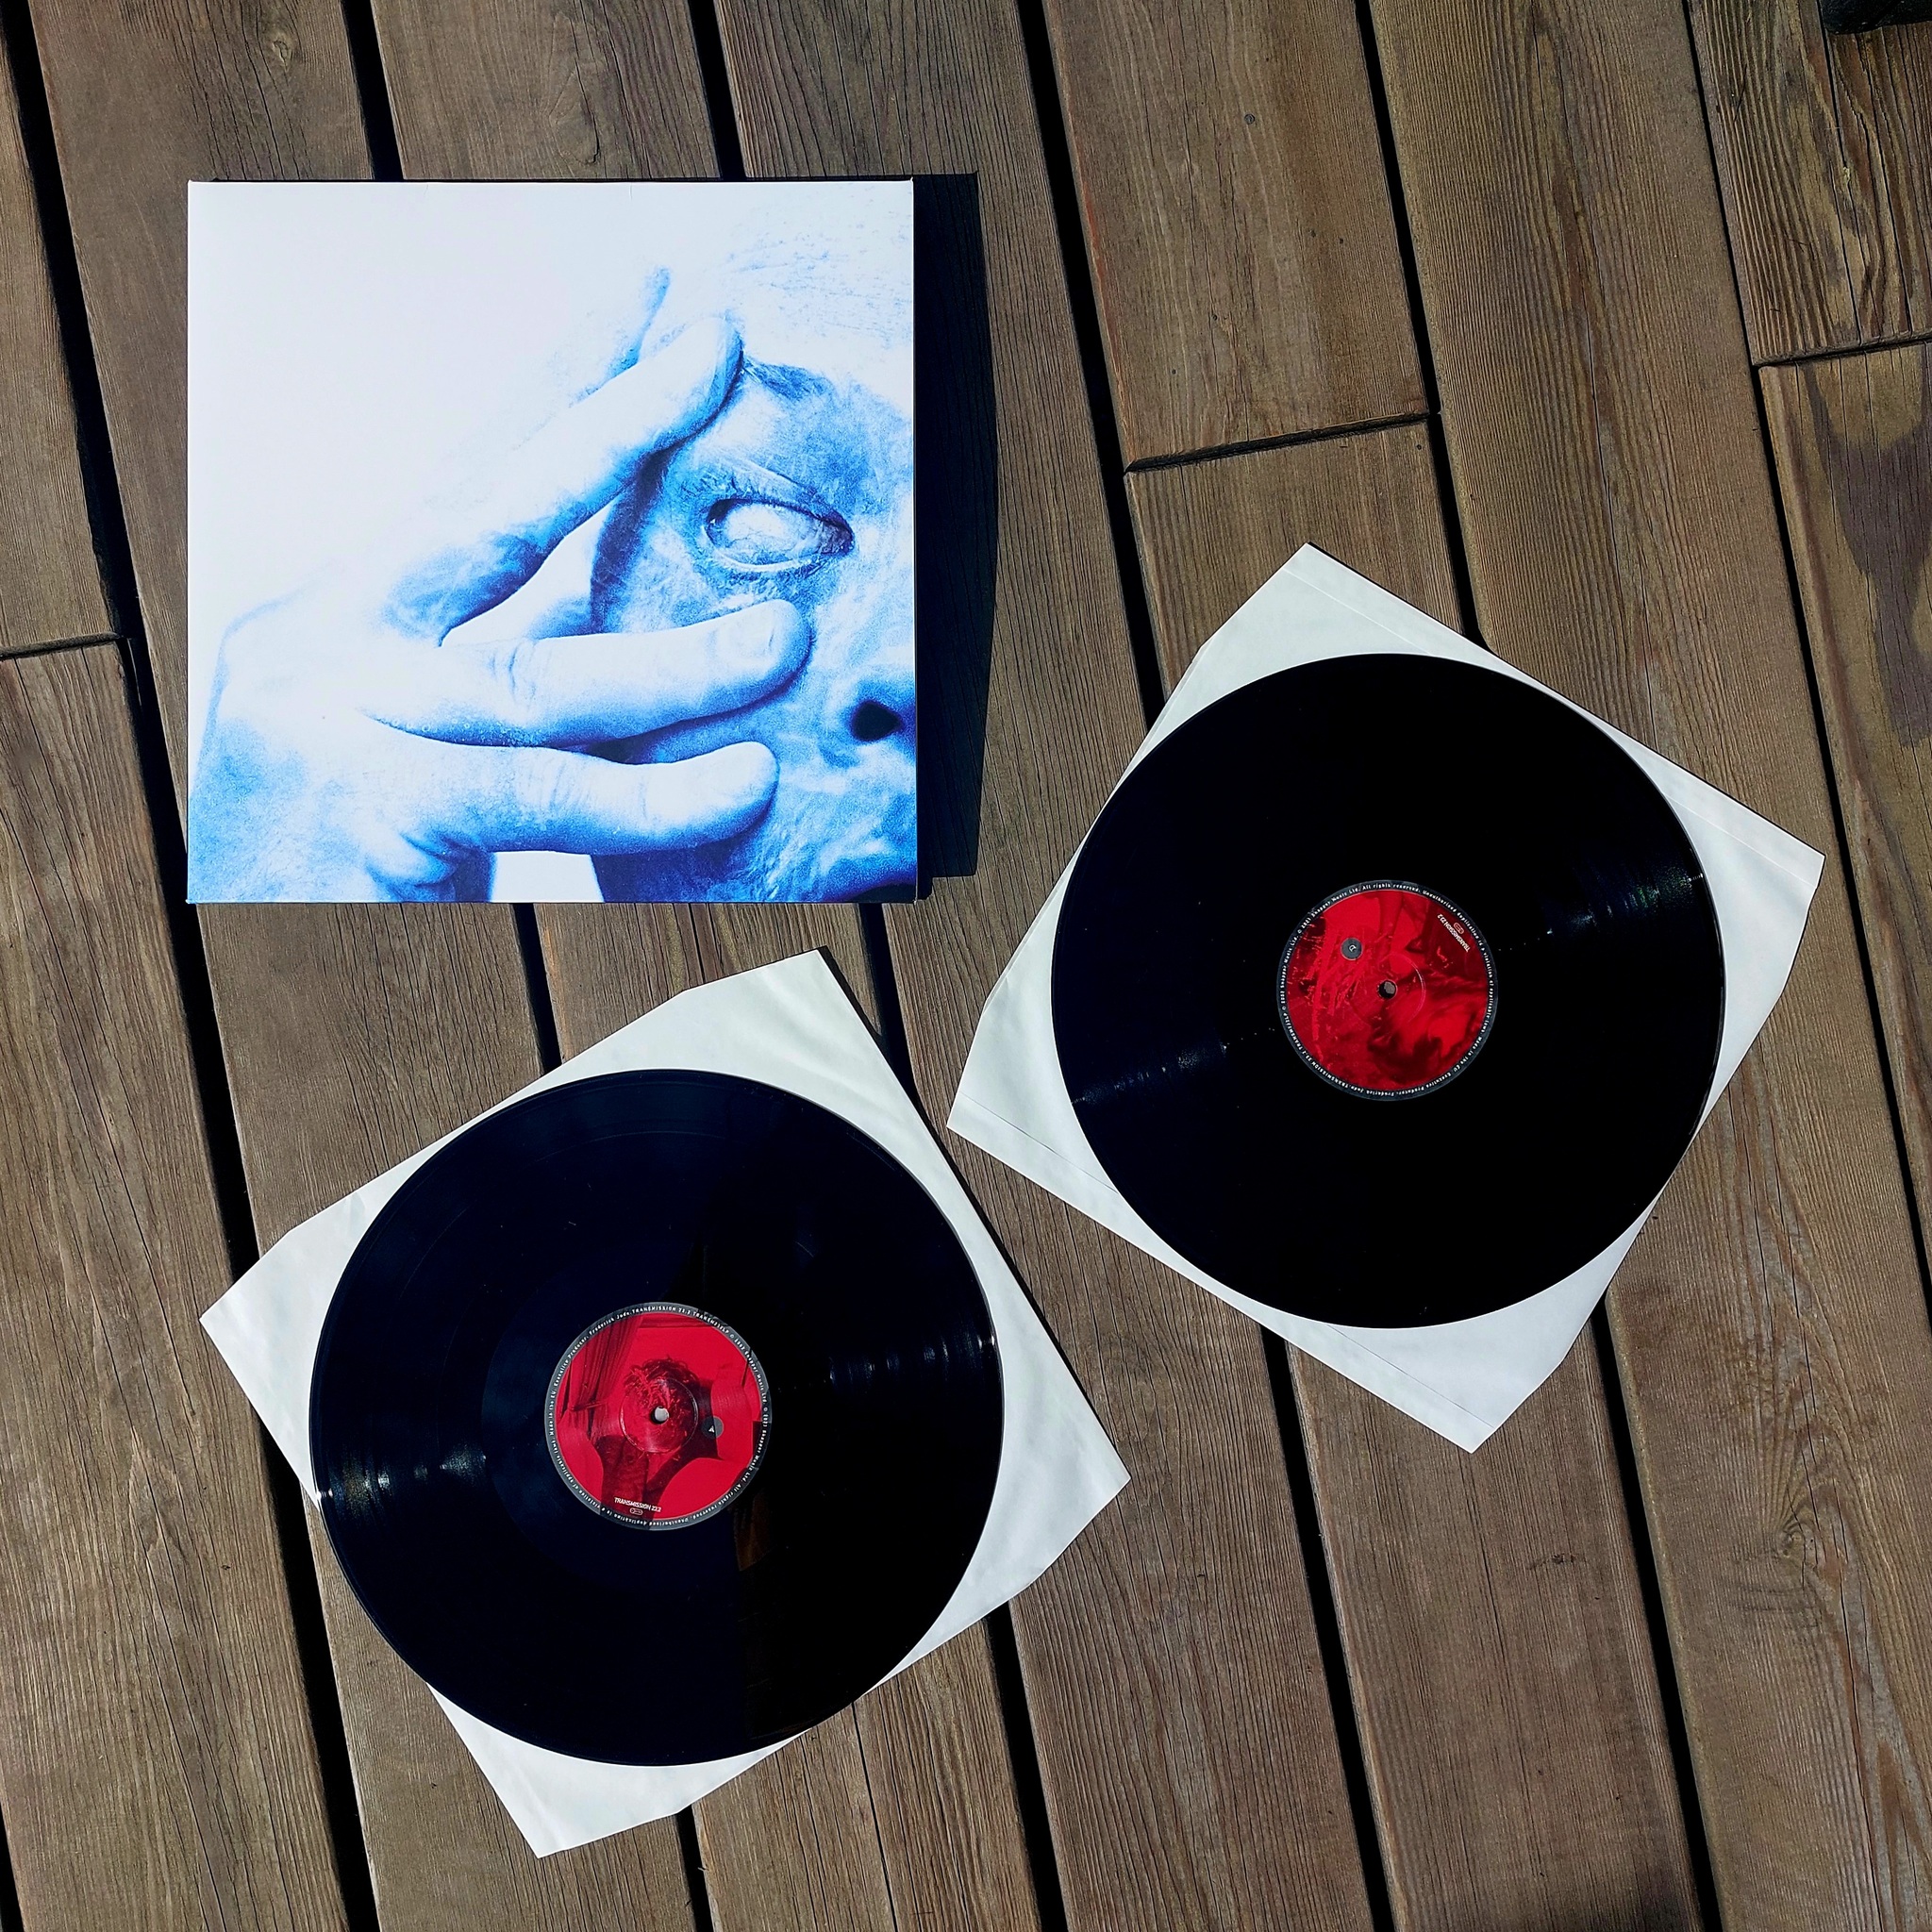 Porcupine Tree - In Absentia - Porcupine Tree, Steven Wilson, Vinyl, Vinyl records, Mobile photography, Longpost